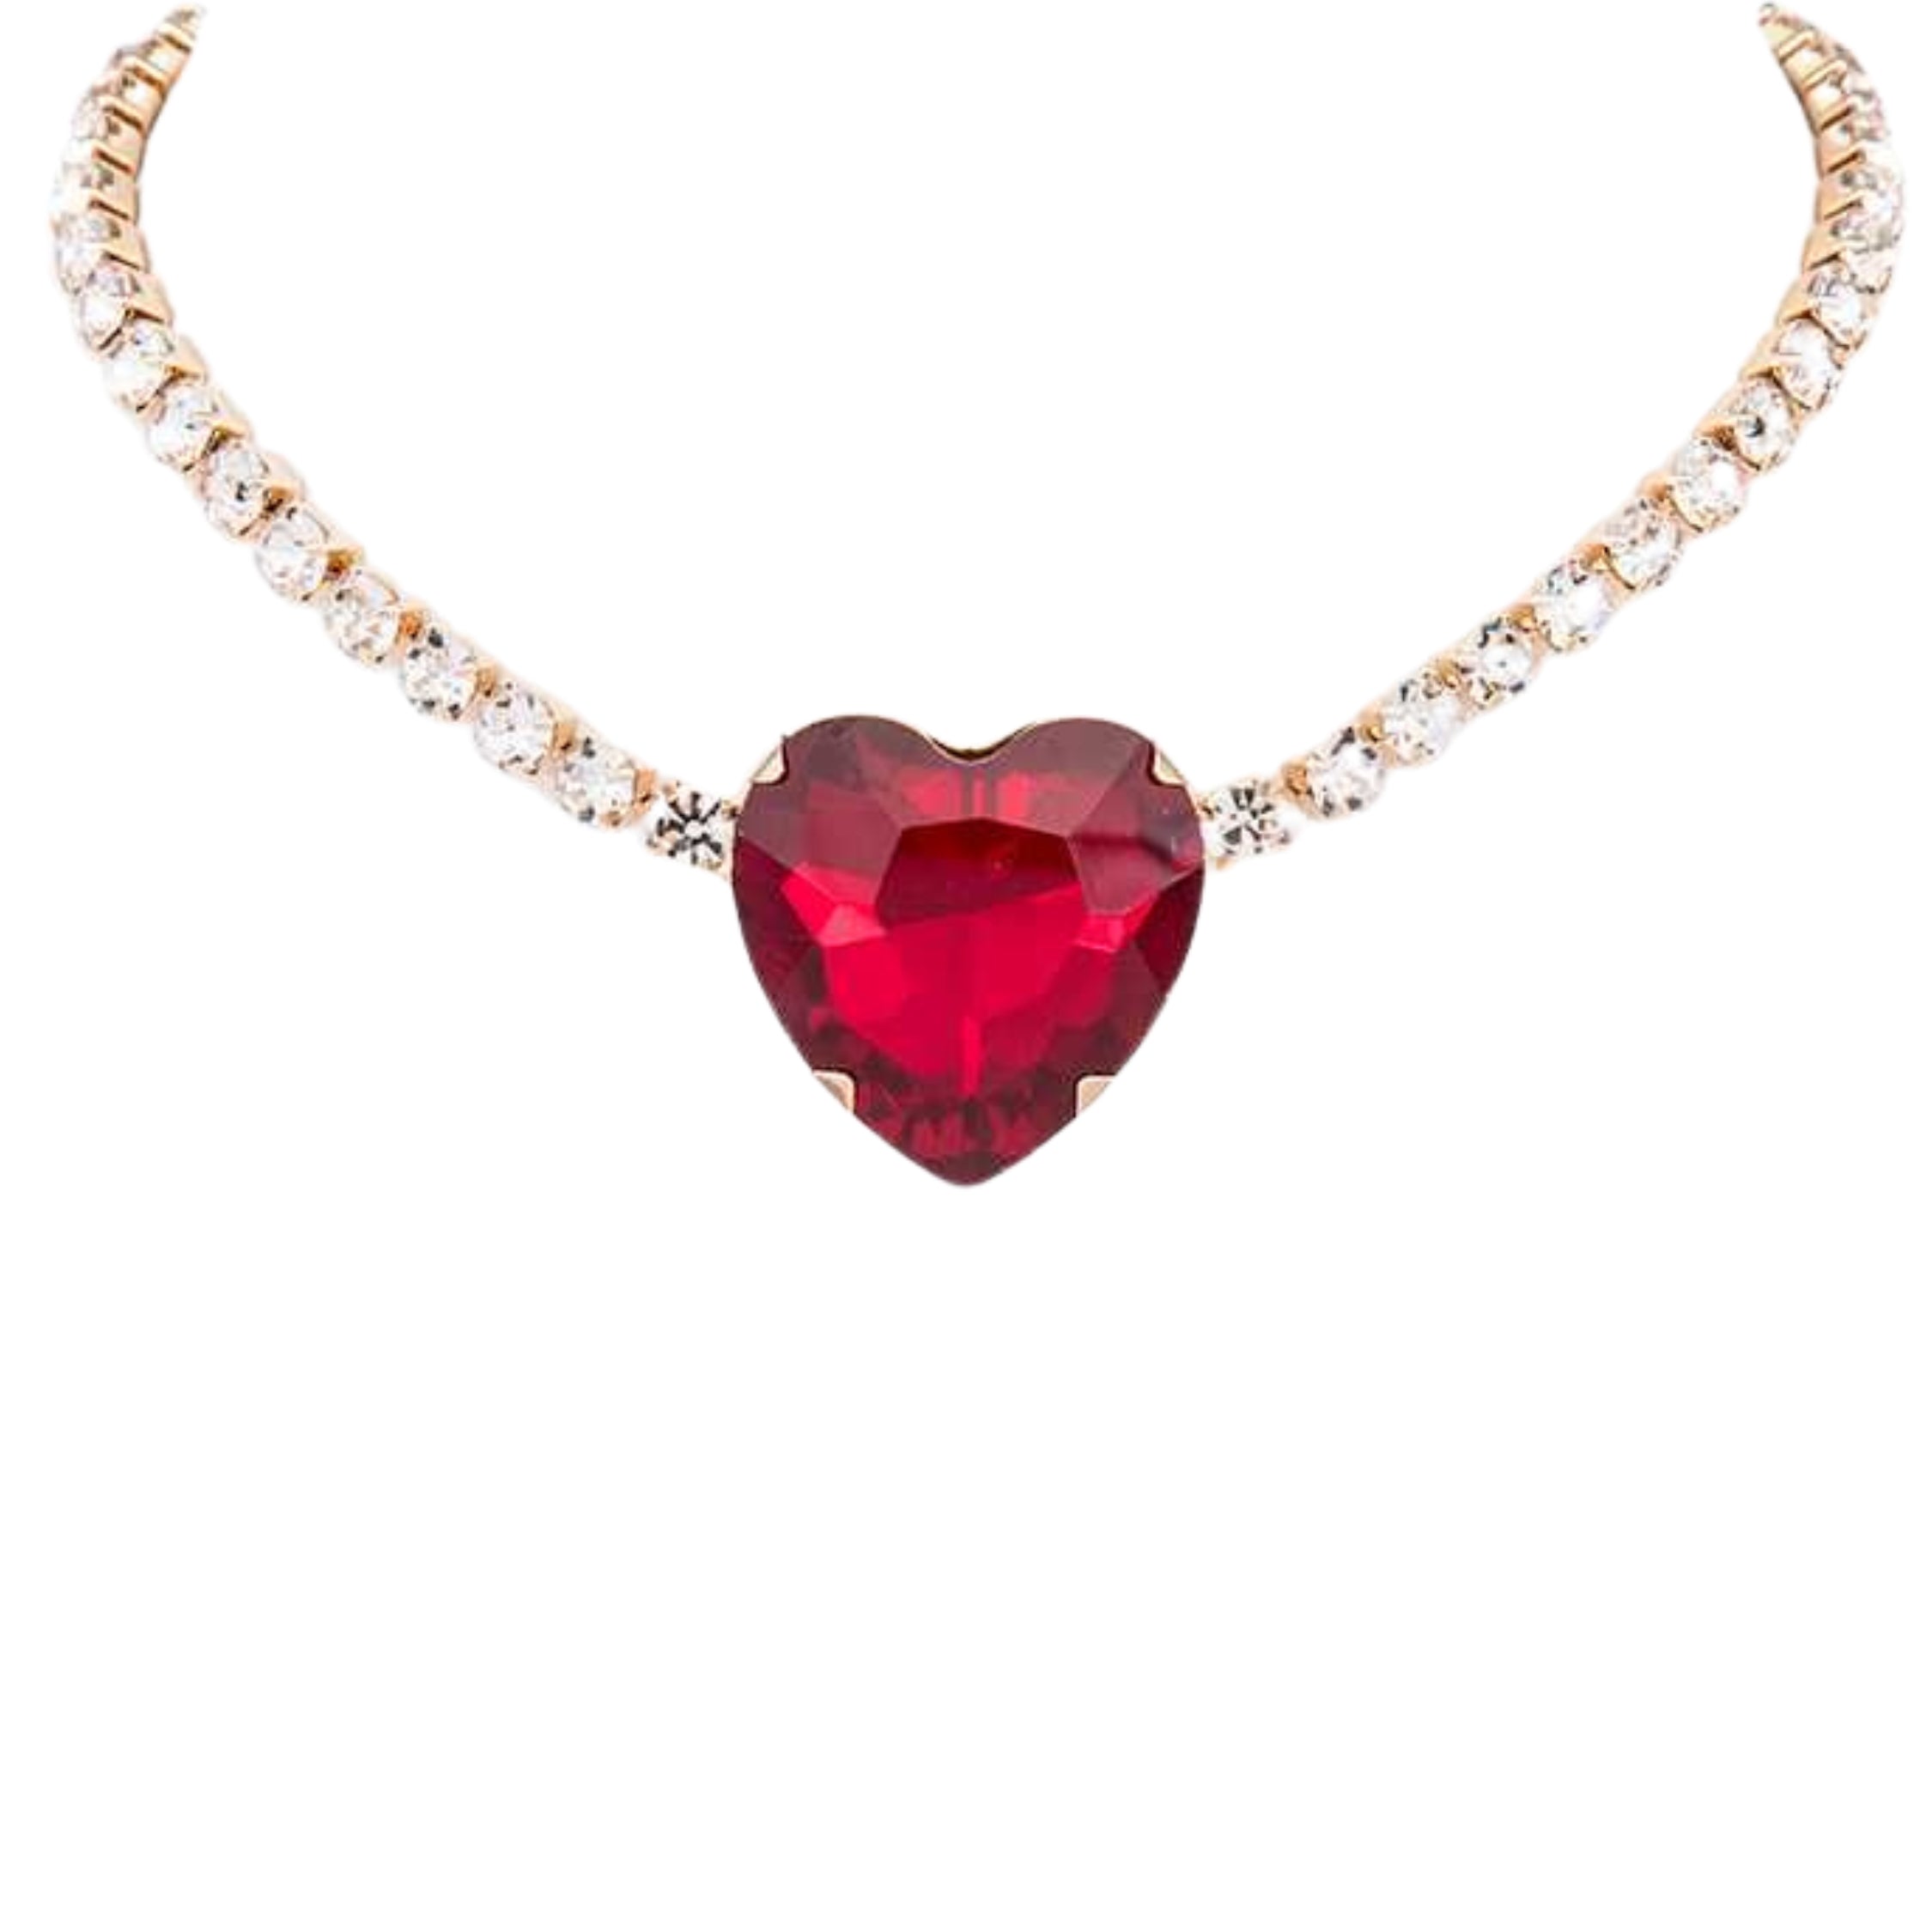 MizDragonfly Jewelry Sweatheart Red_Rhinestones Gold Necklace Valentine Collection